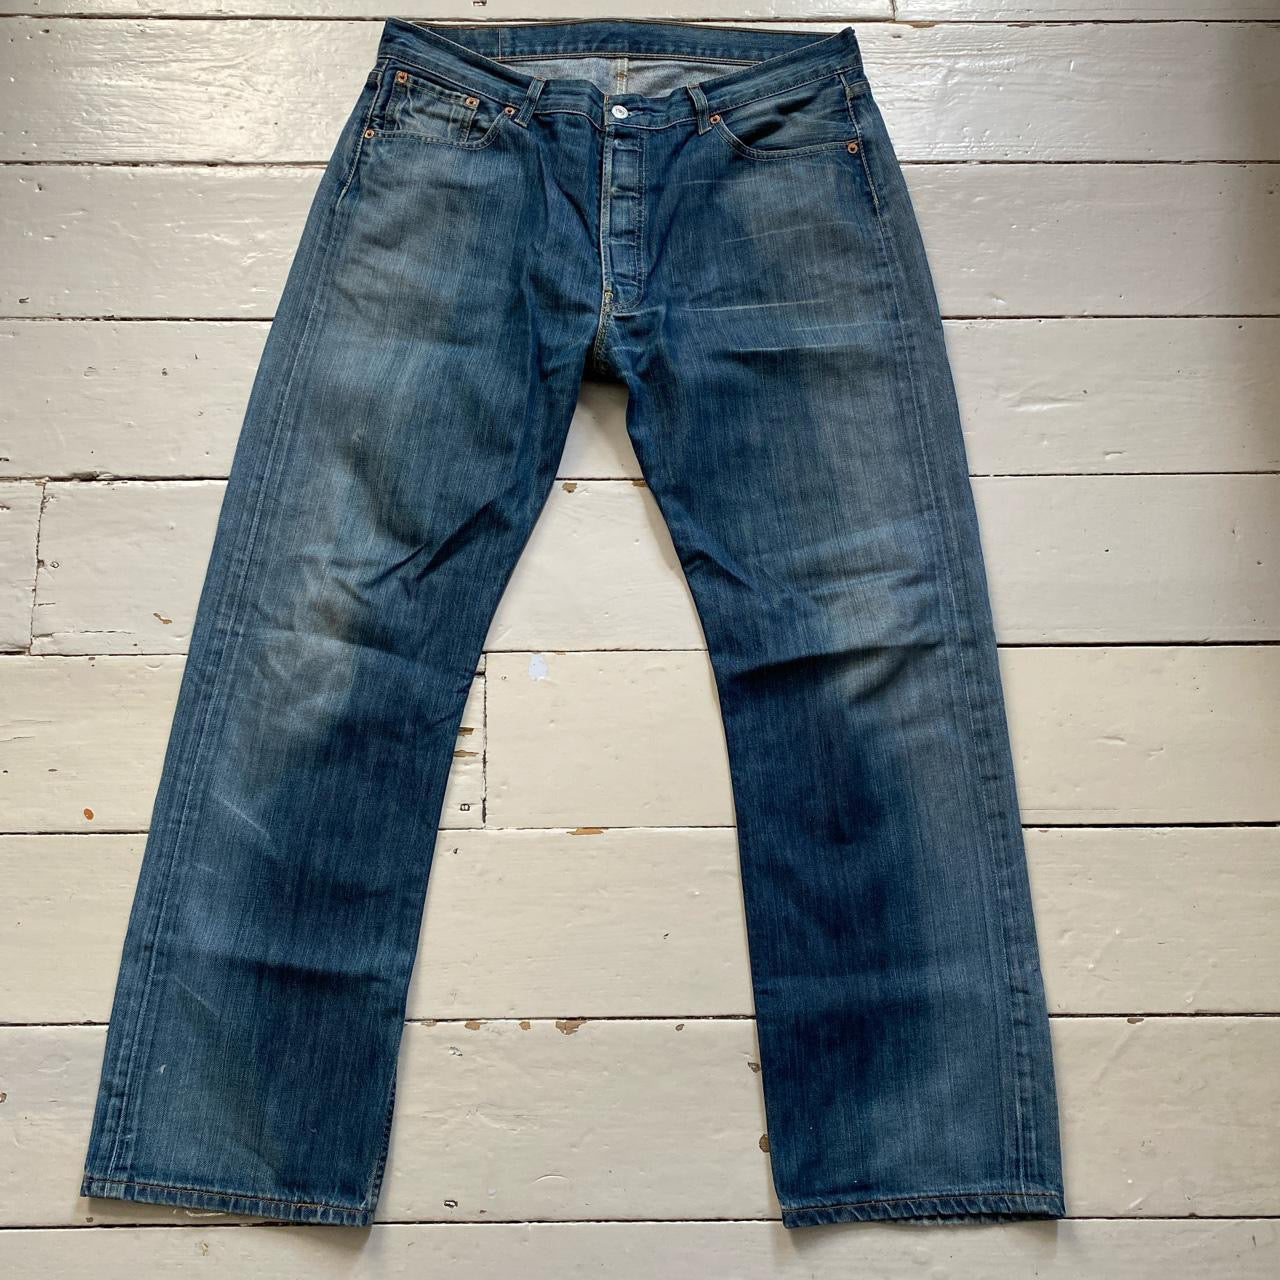 Levis 501 Stonewashed Jeans (38/31)